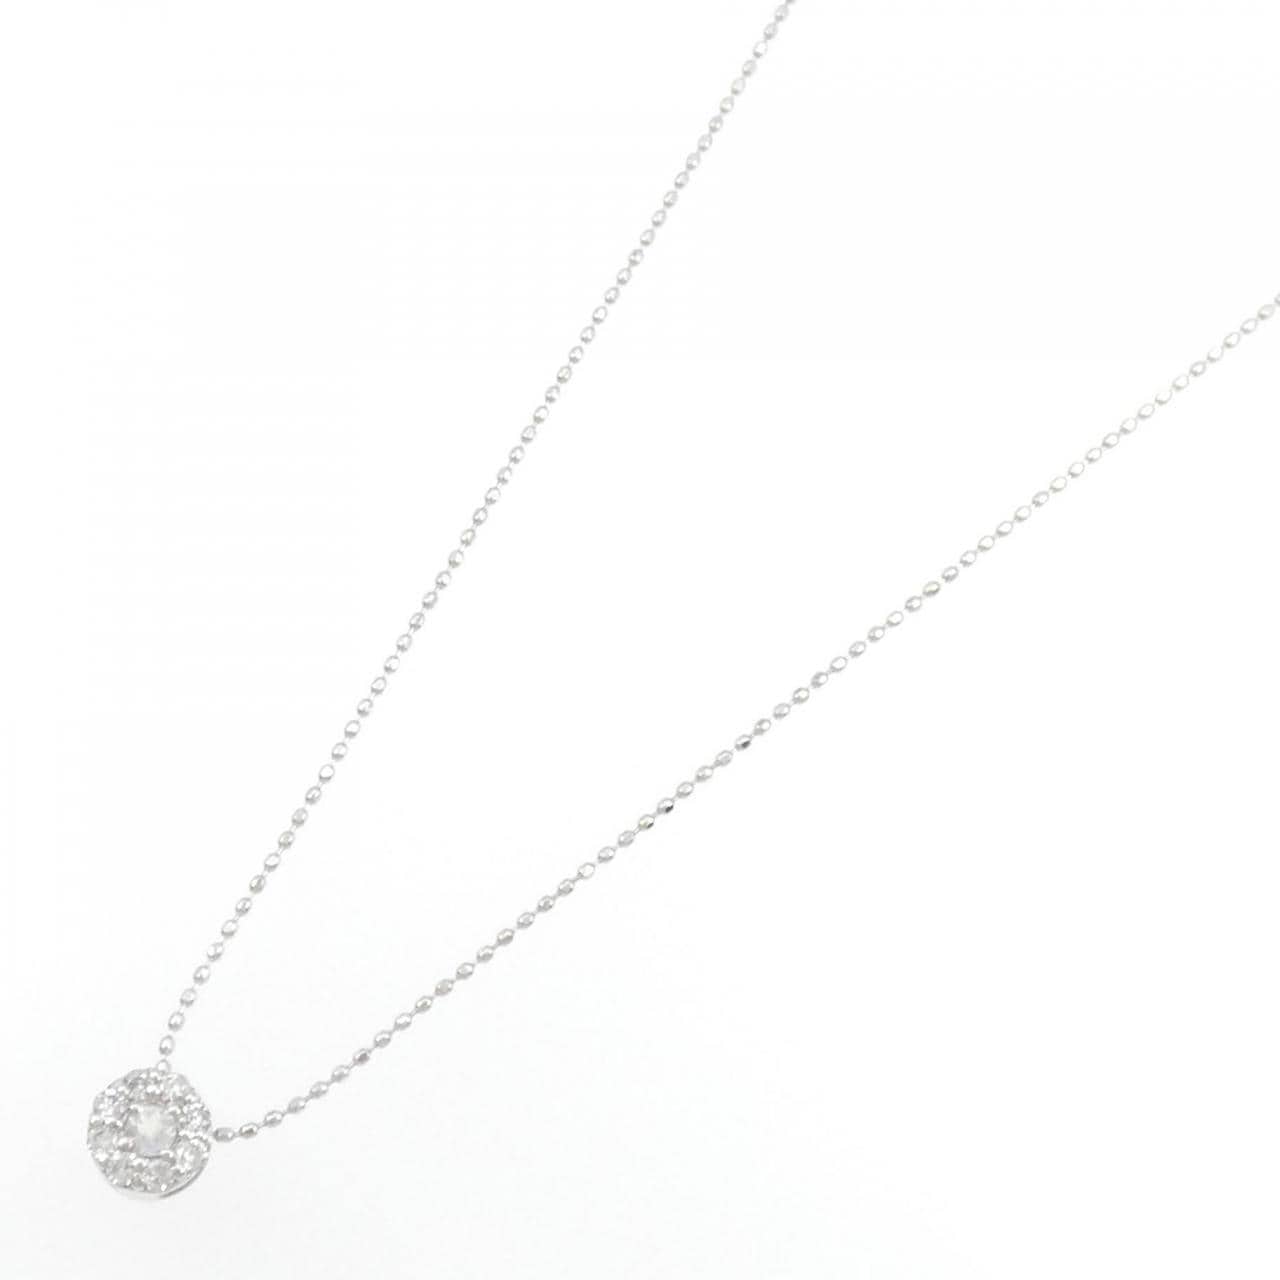 K18WG Moonstone necklace